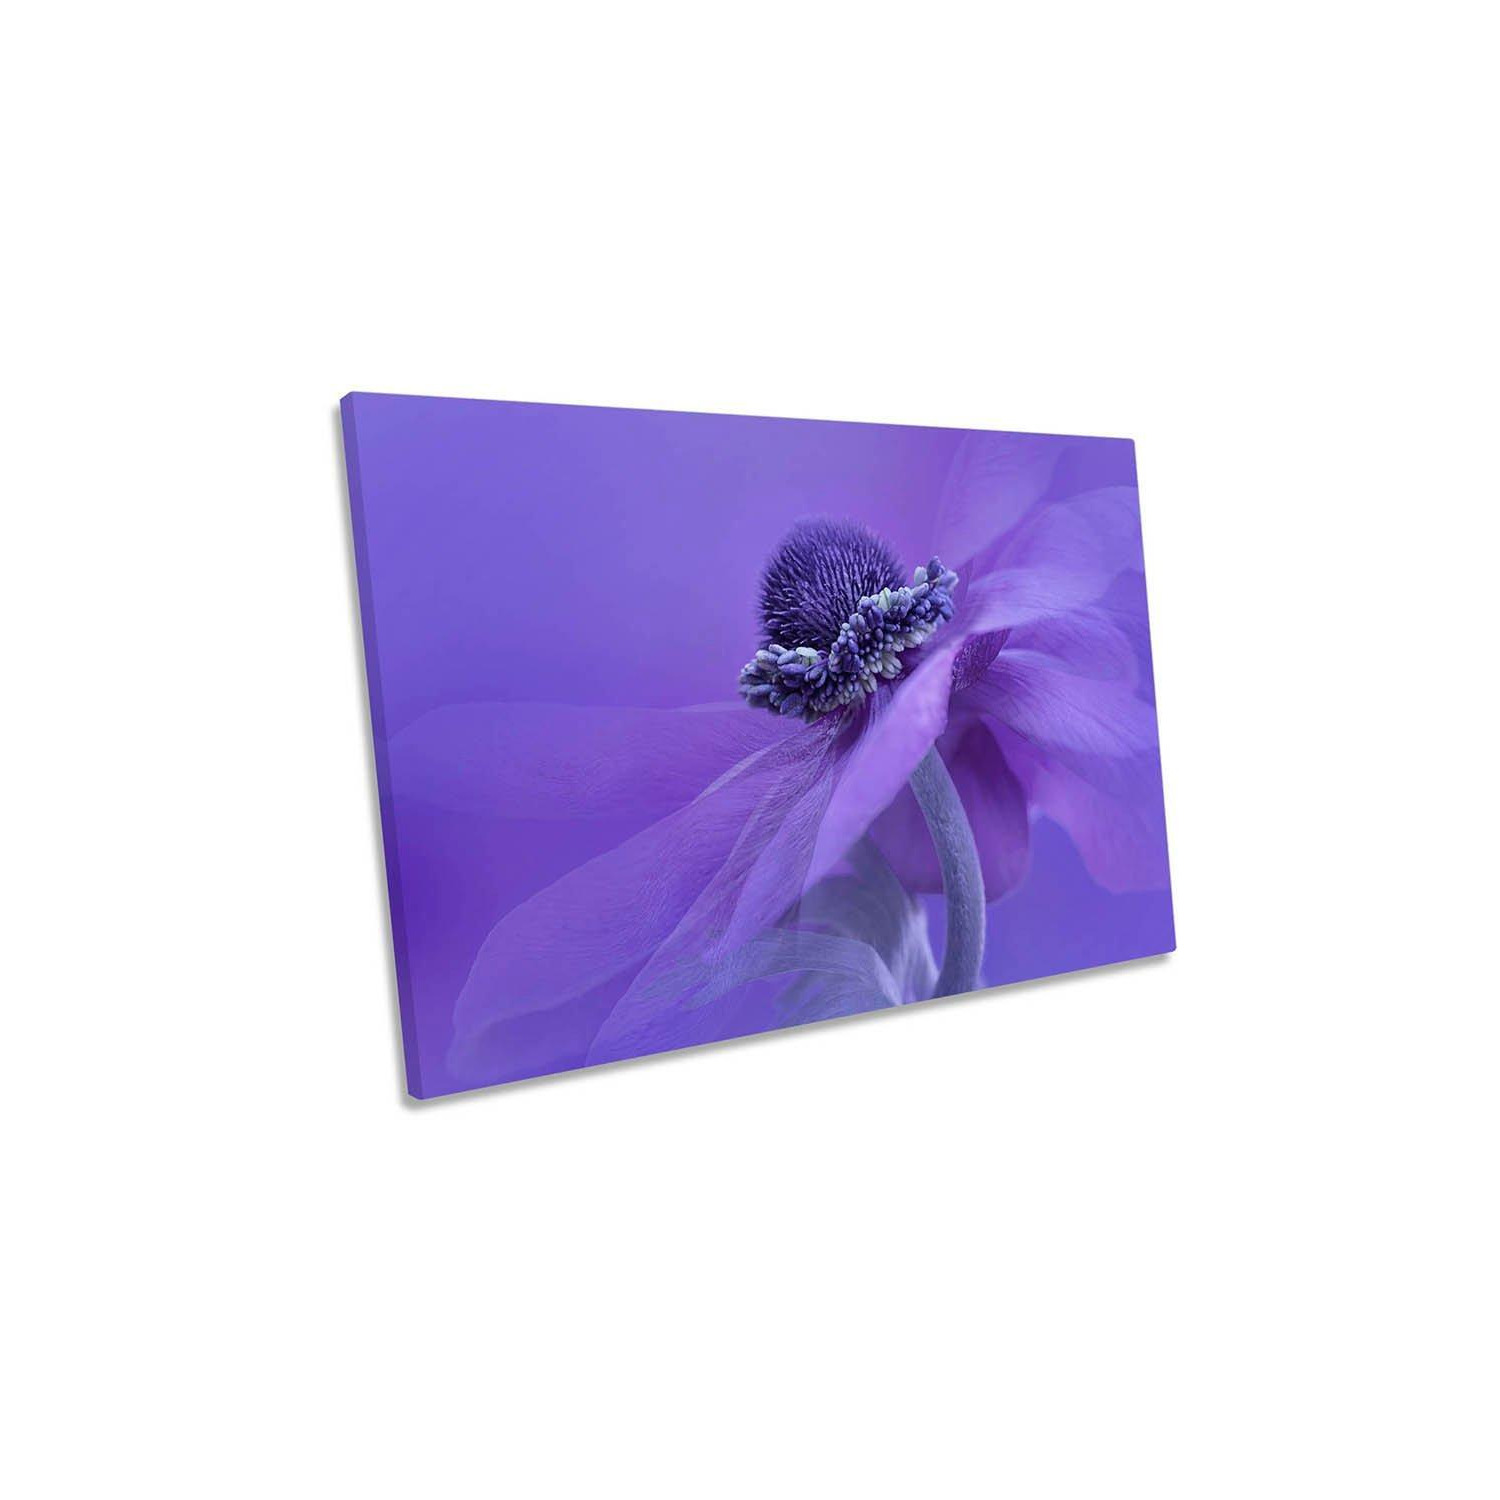 Purple Anemone Flower Petals Floral Canvas Wall Art Picture Print - image 1